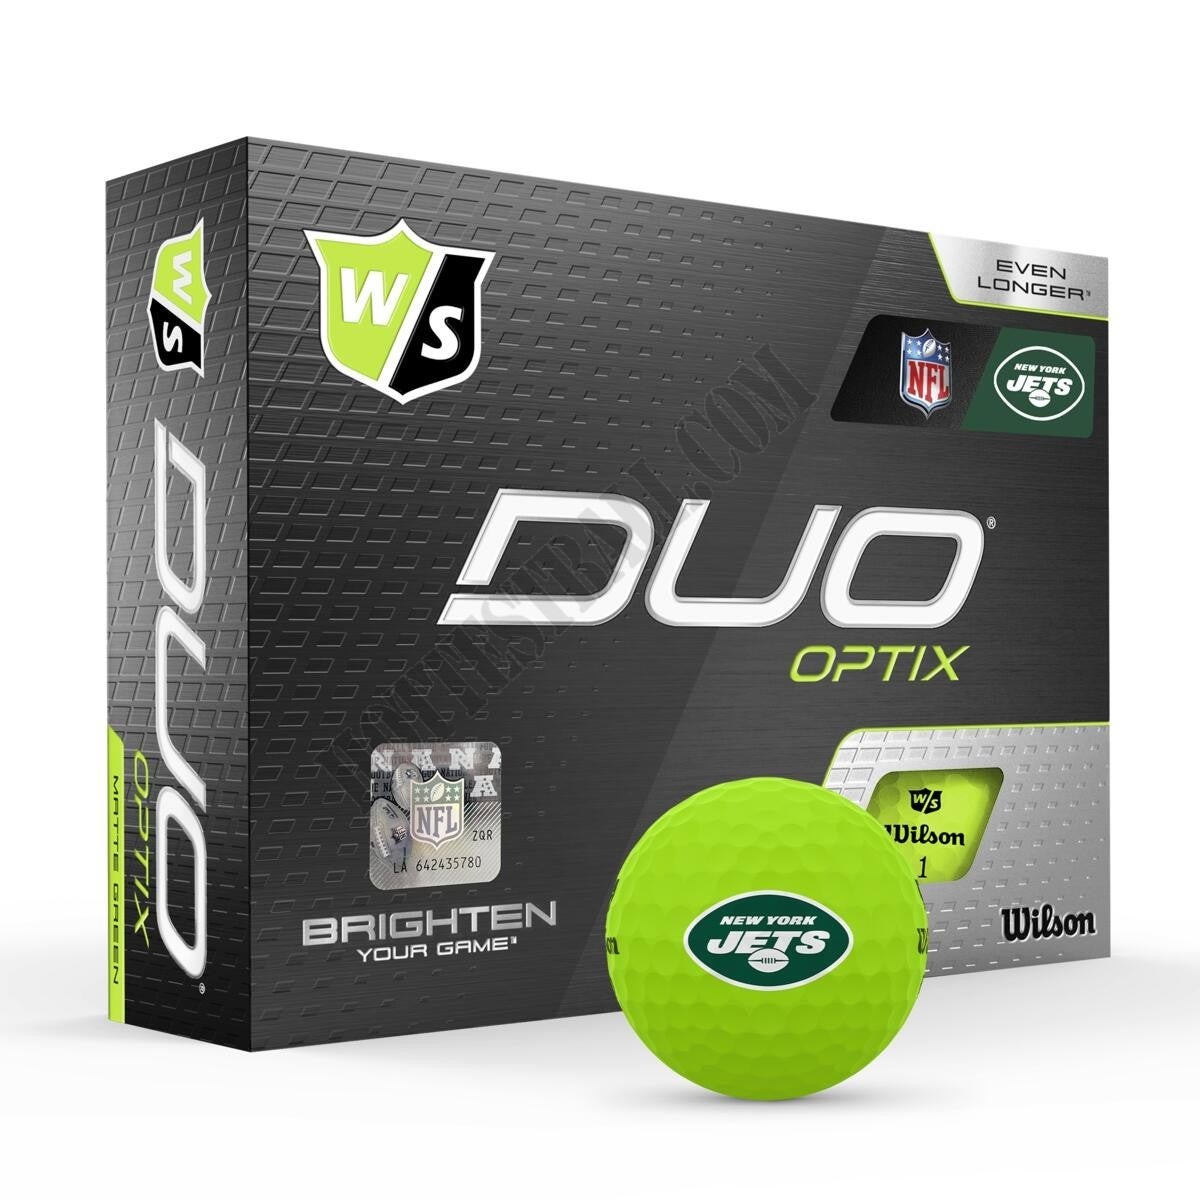 Duo Optix NFL Golf Balls - New York Jets ● Wilson Promotions - -0